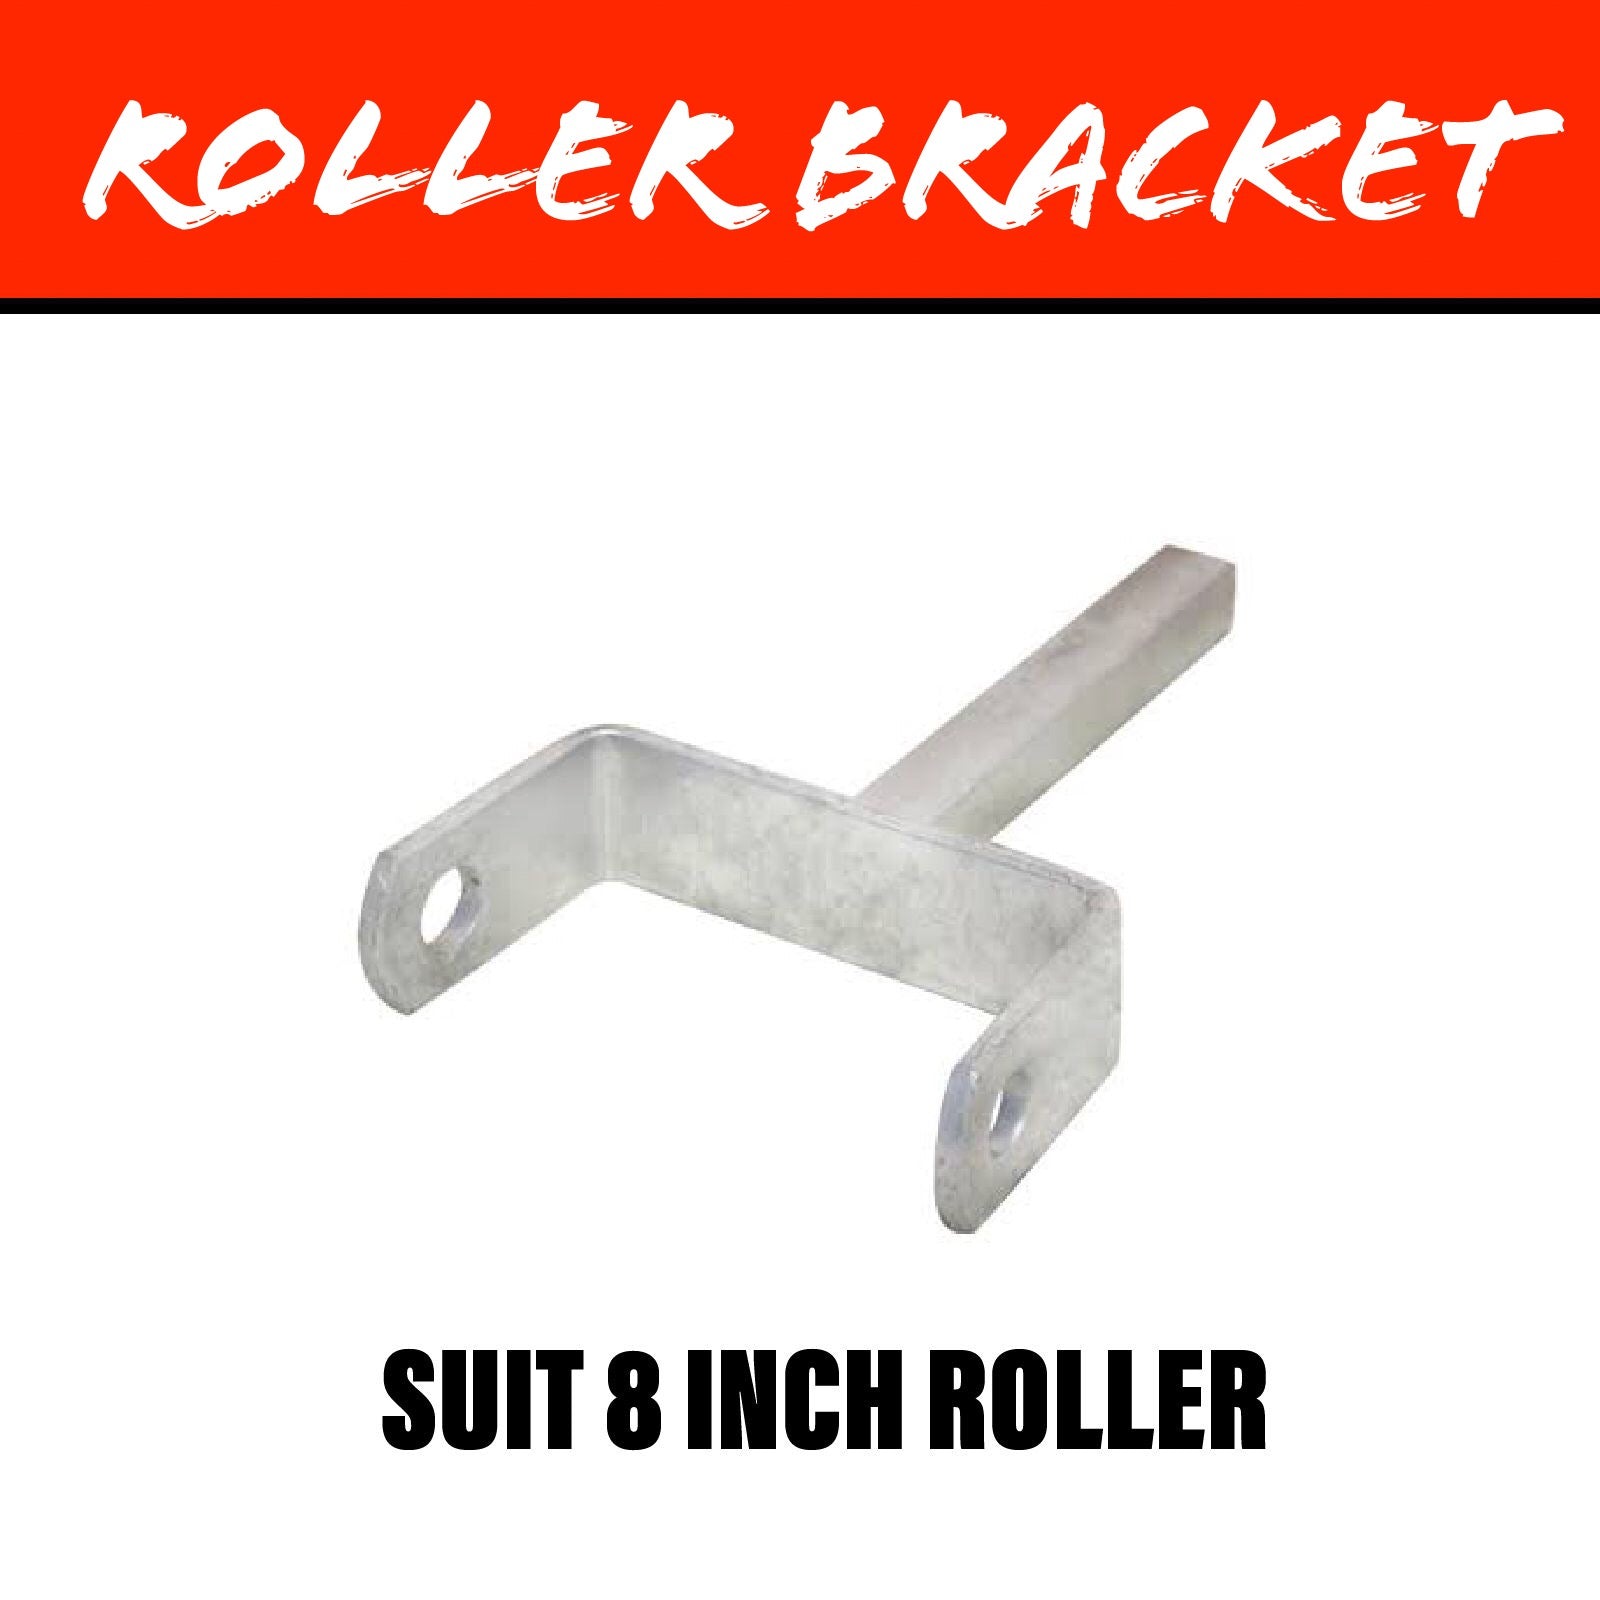 8 INCH Centre Roller Bracket